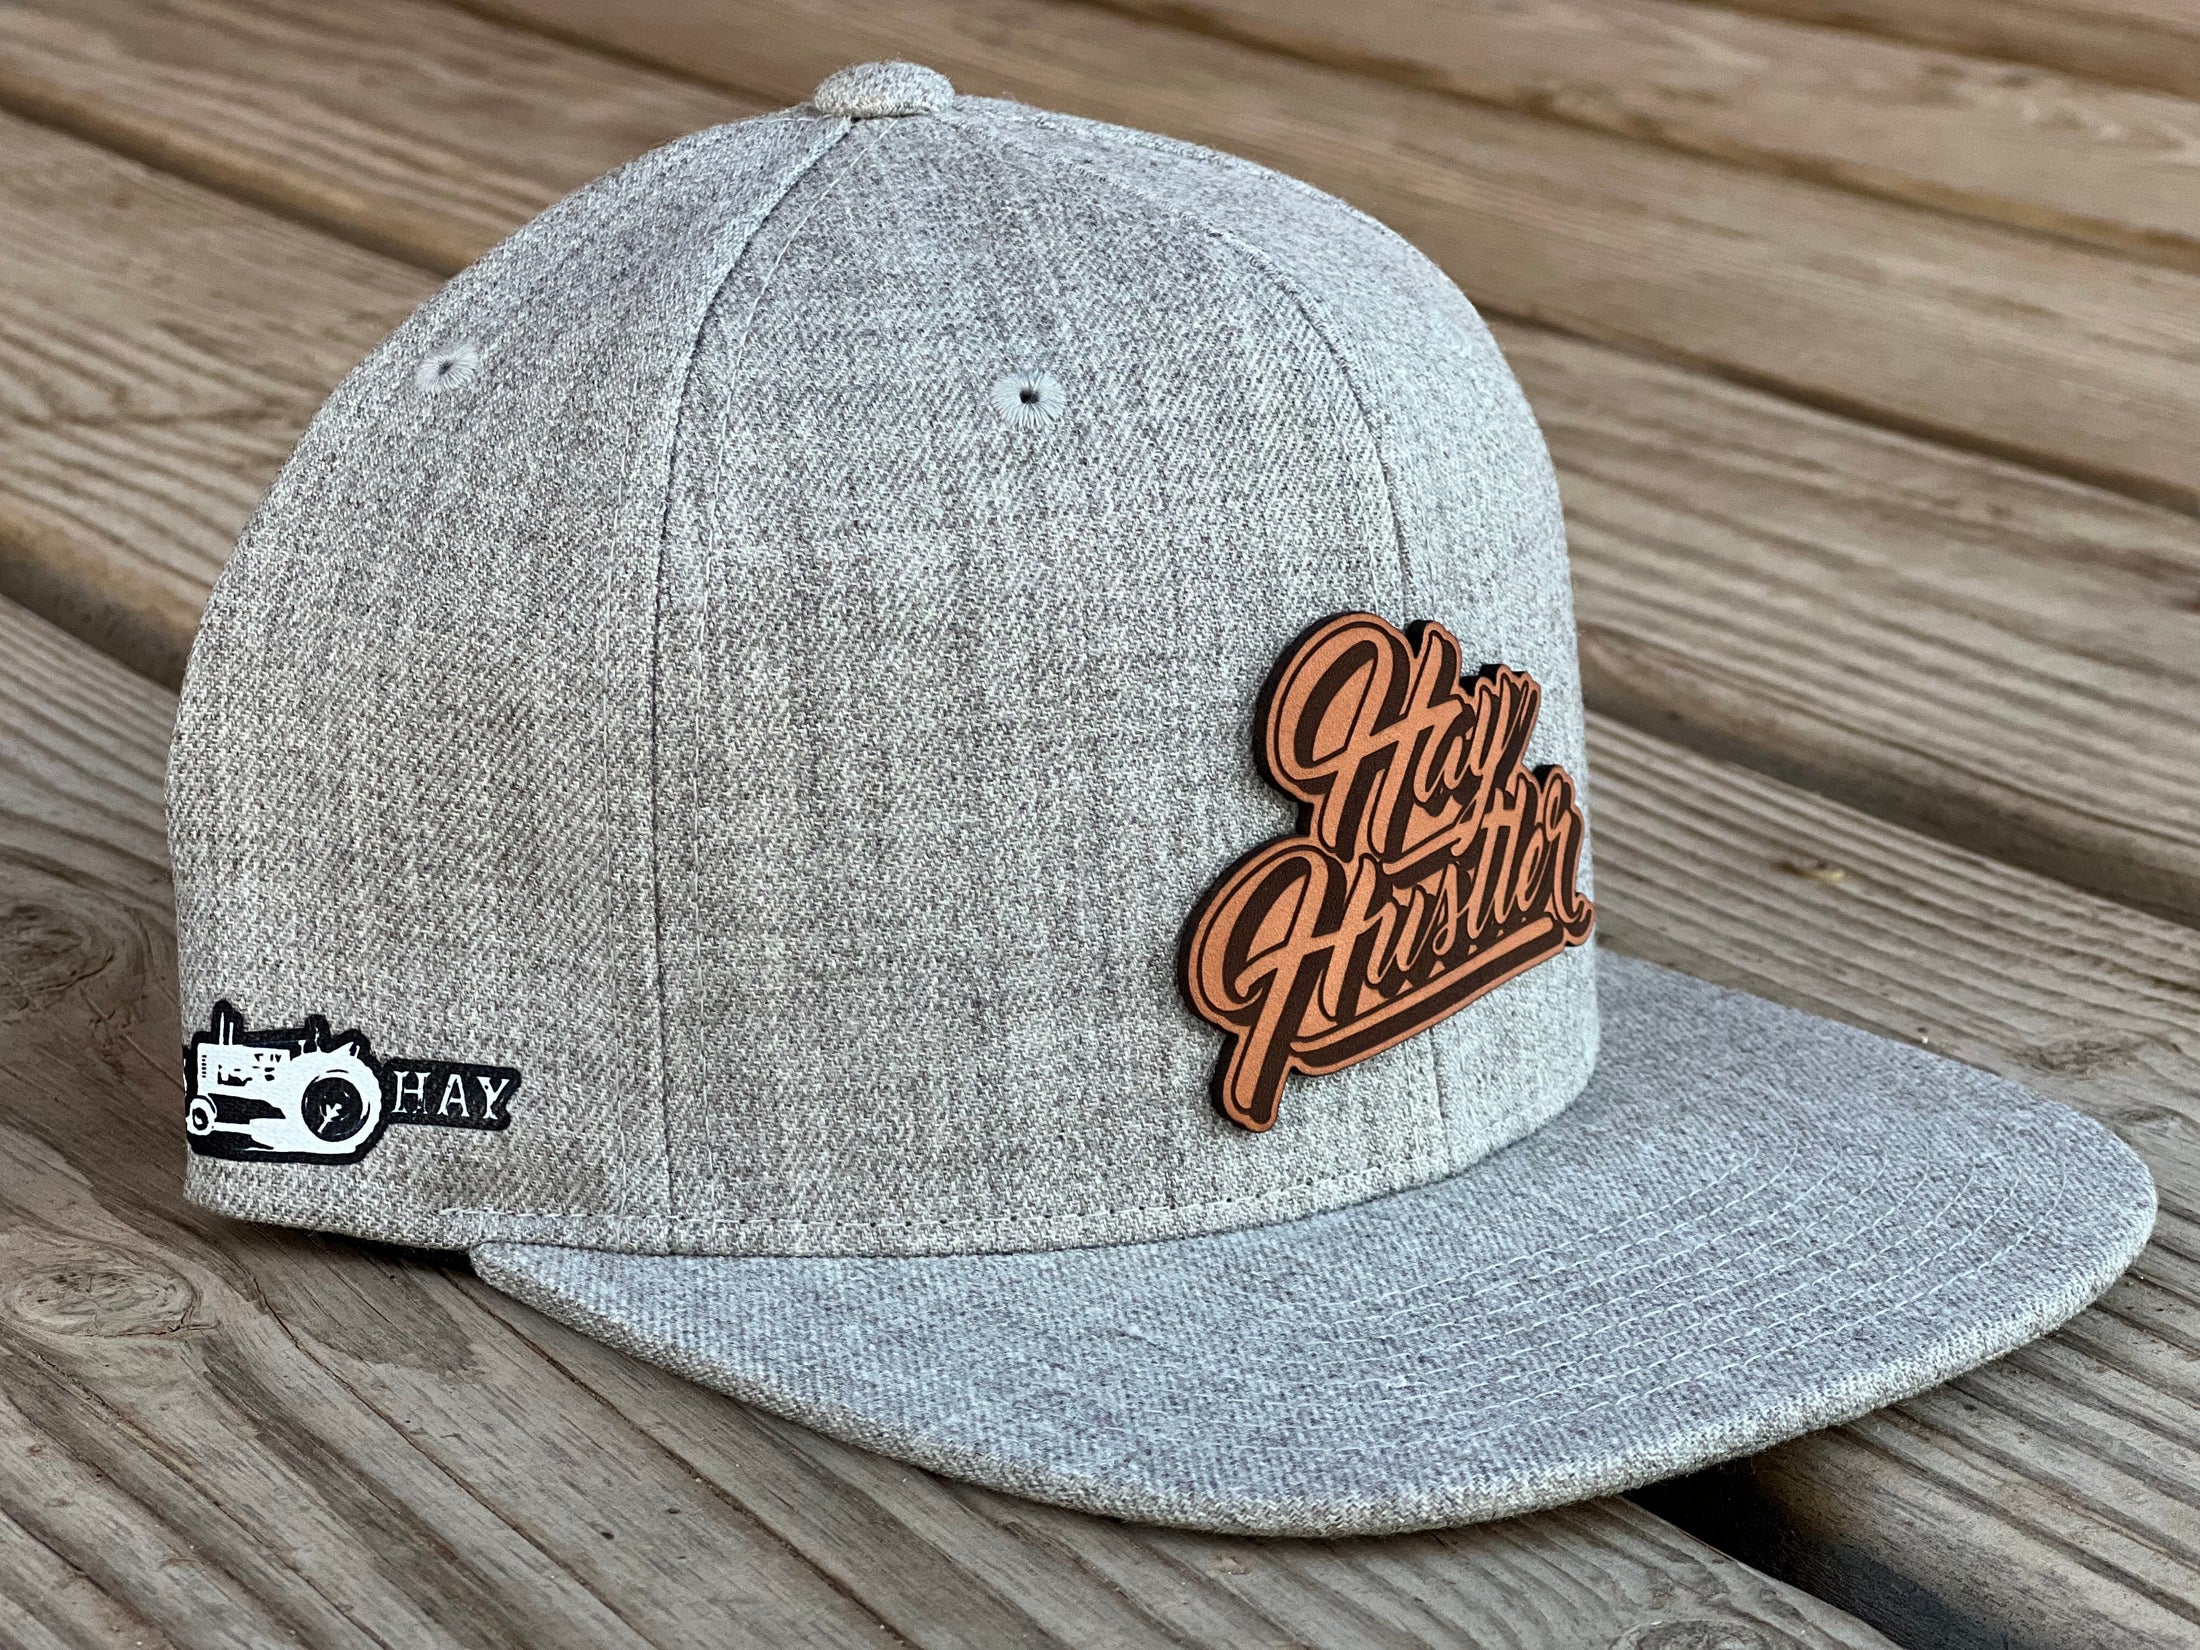 Hay Hustler Leather Patch Flat Bill Hat